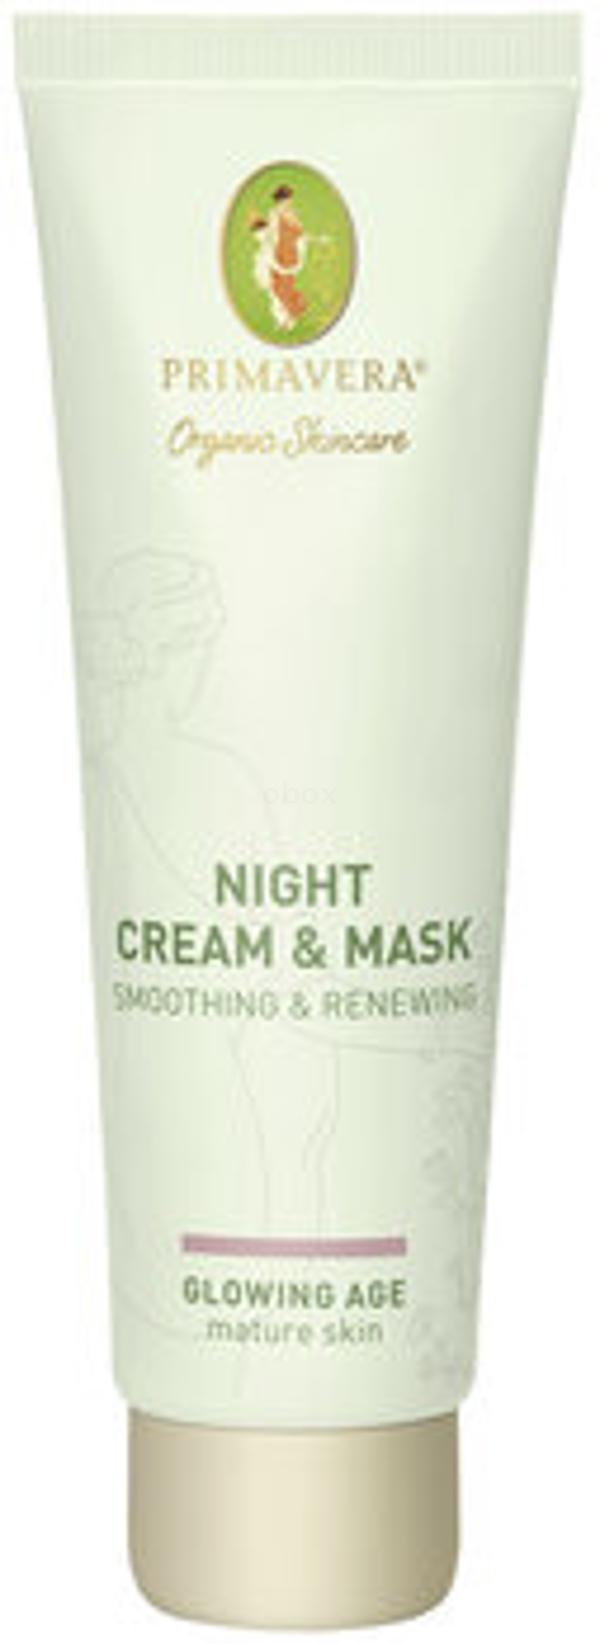 Produktfoto zu Night Cream & Mask - Smoothing & Renewing, 50 ml